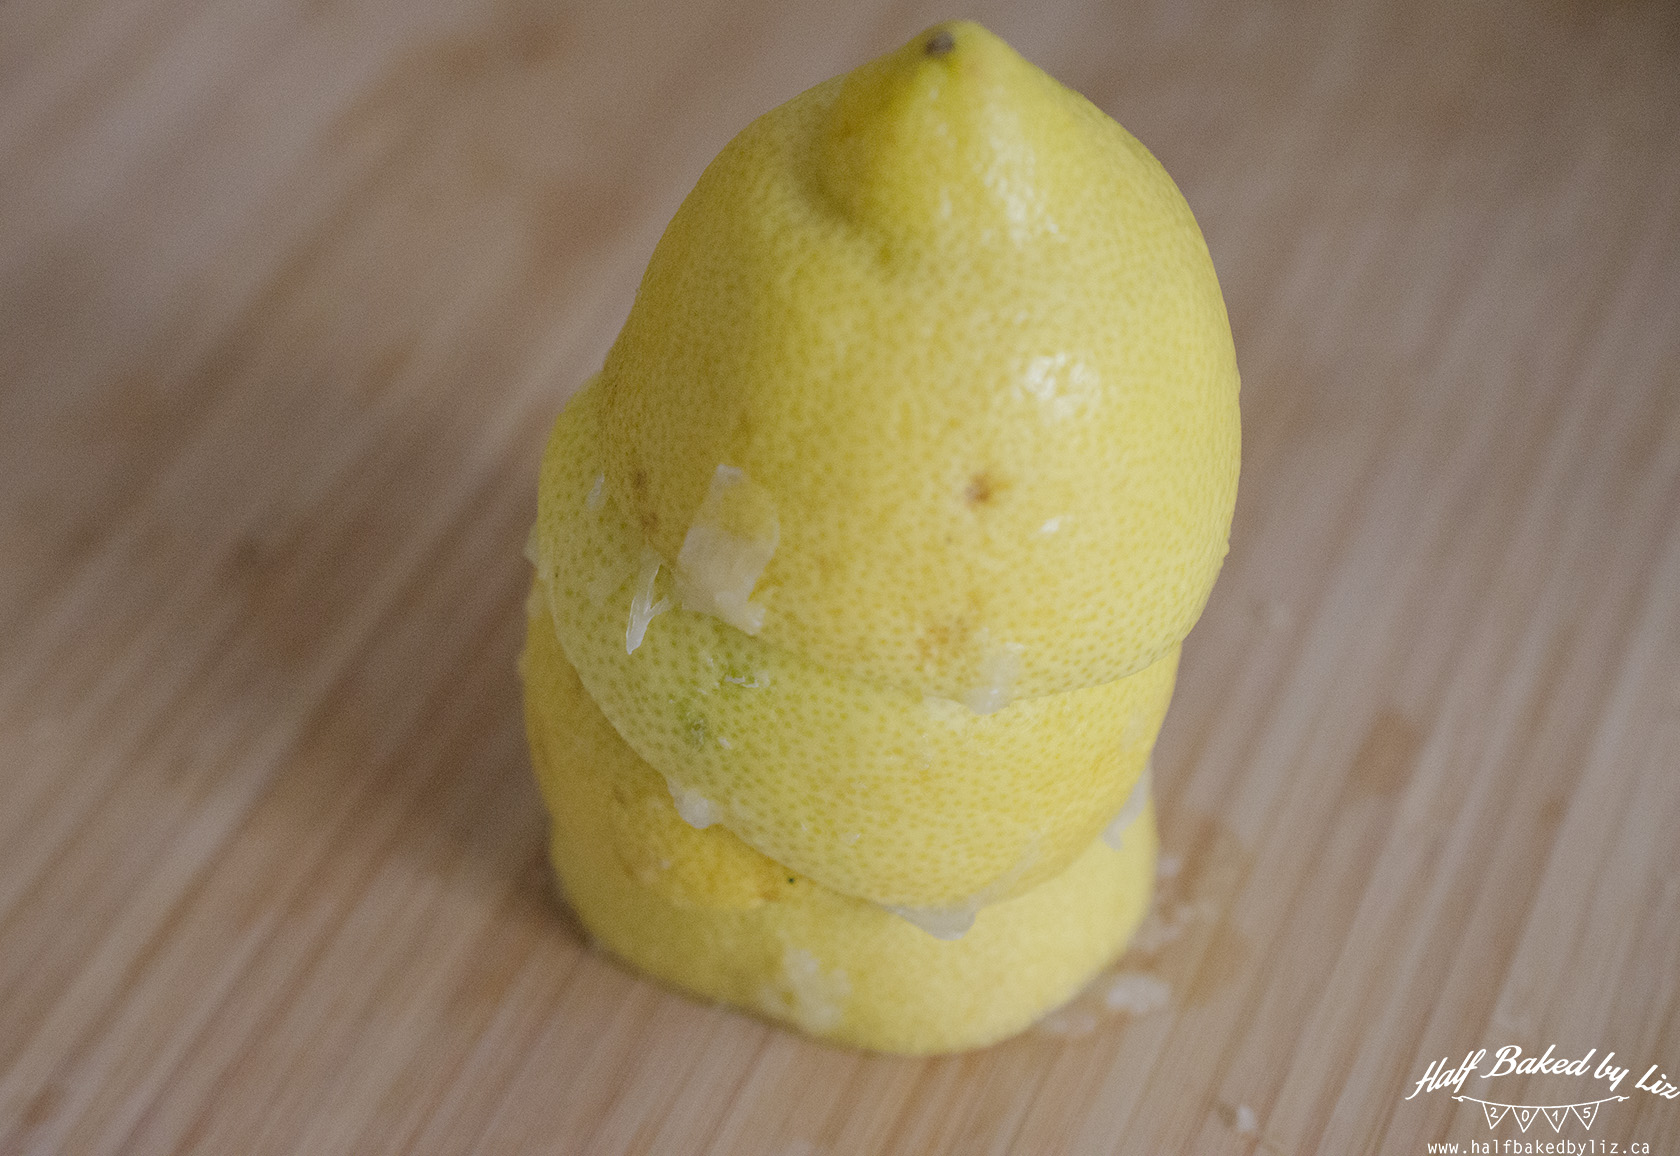 2.5 - Lemons